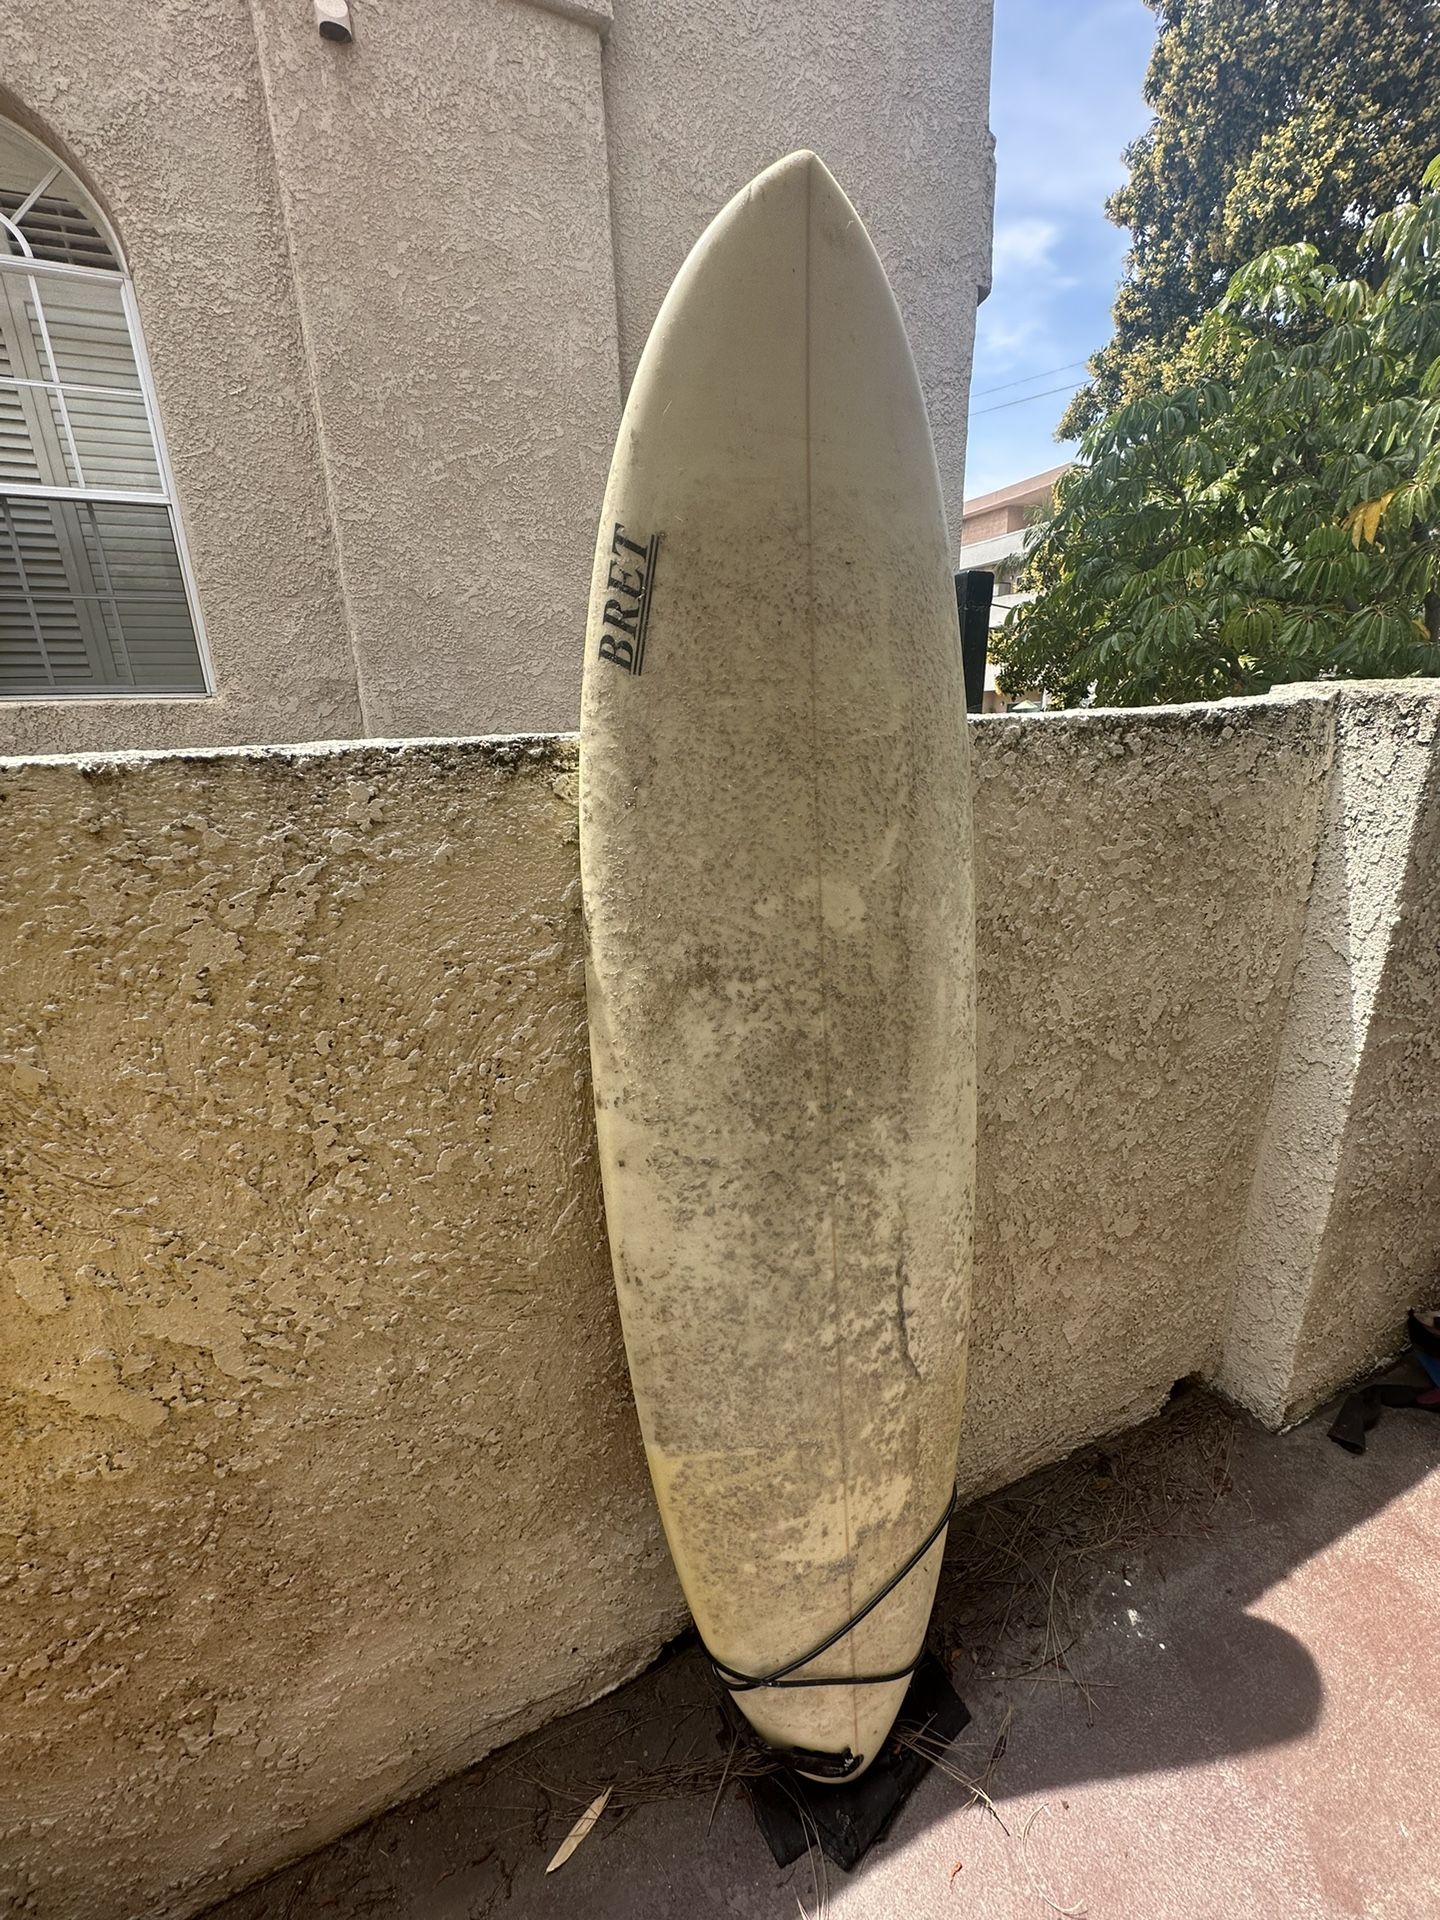 6’10” Thruster Surfboard